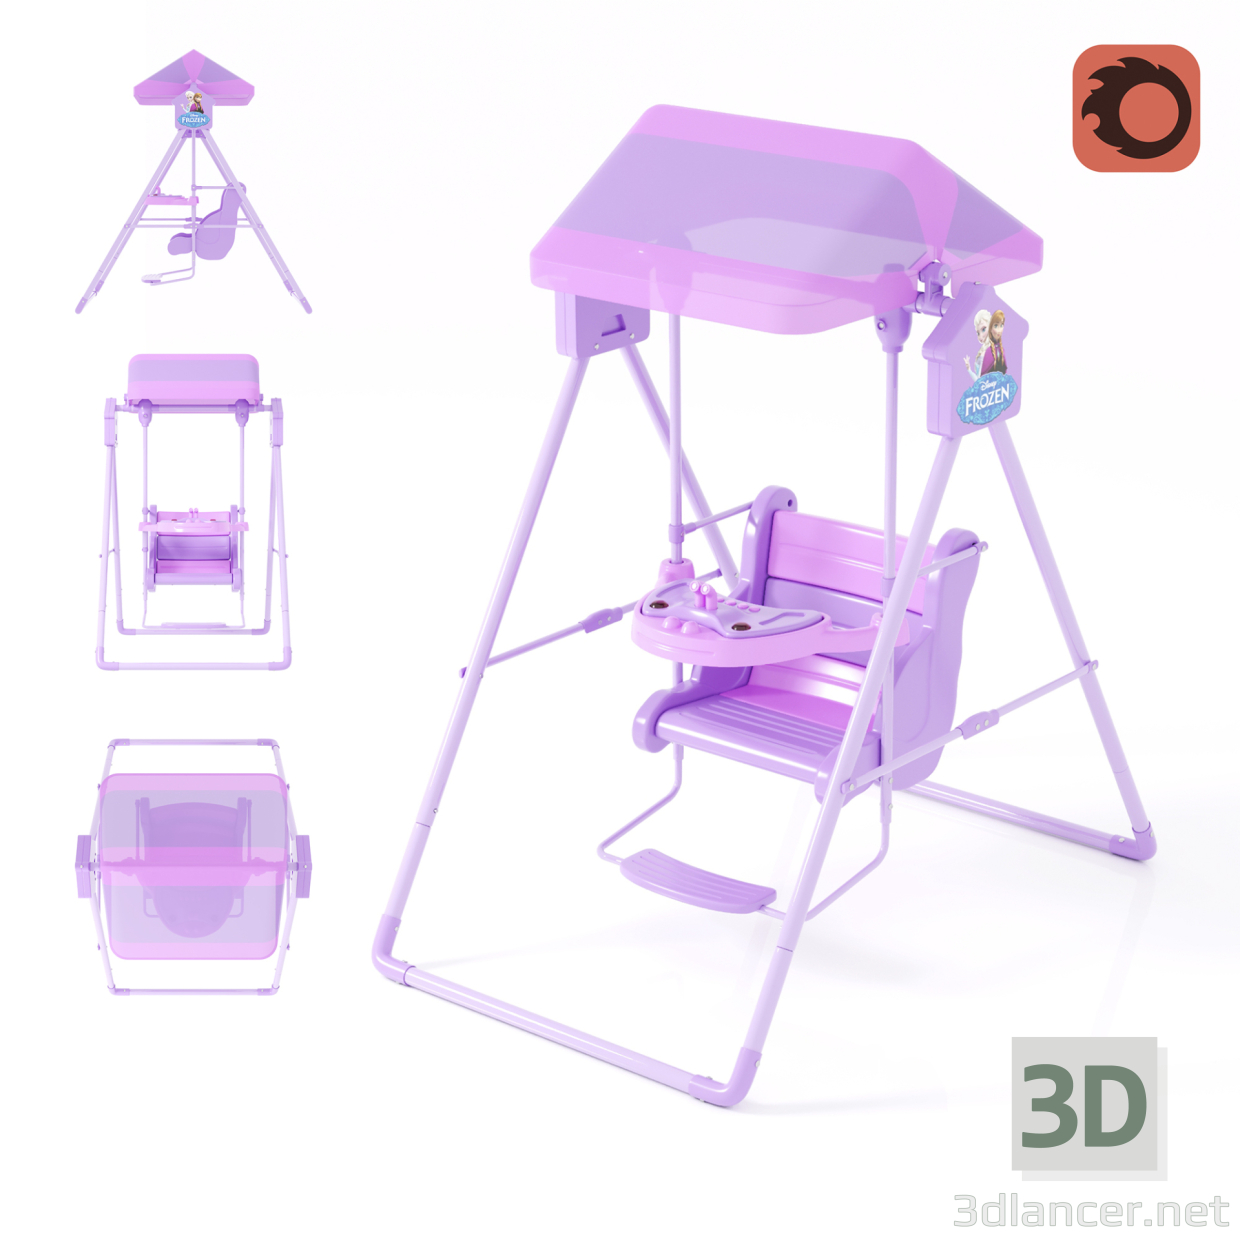 3d Children's swing model buy - render